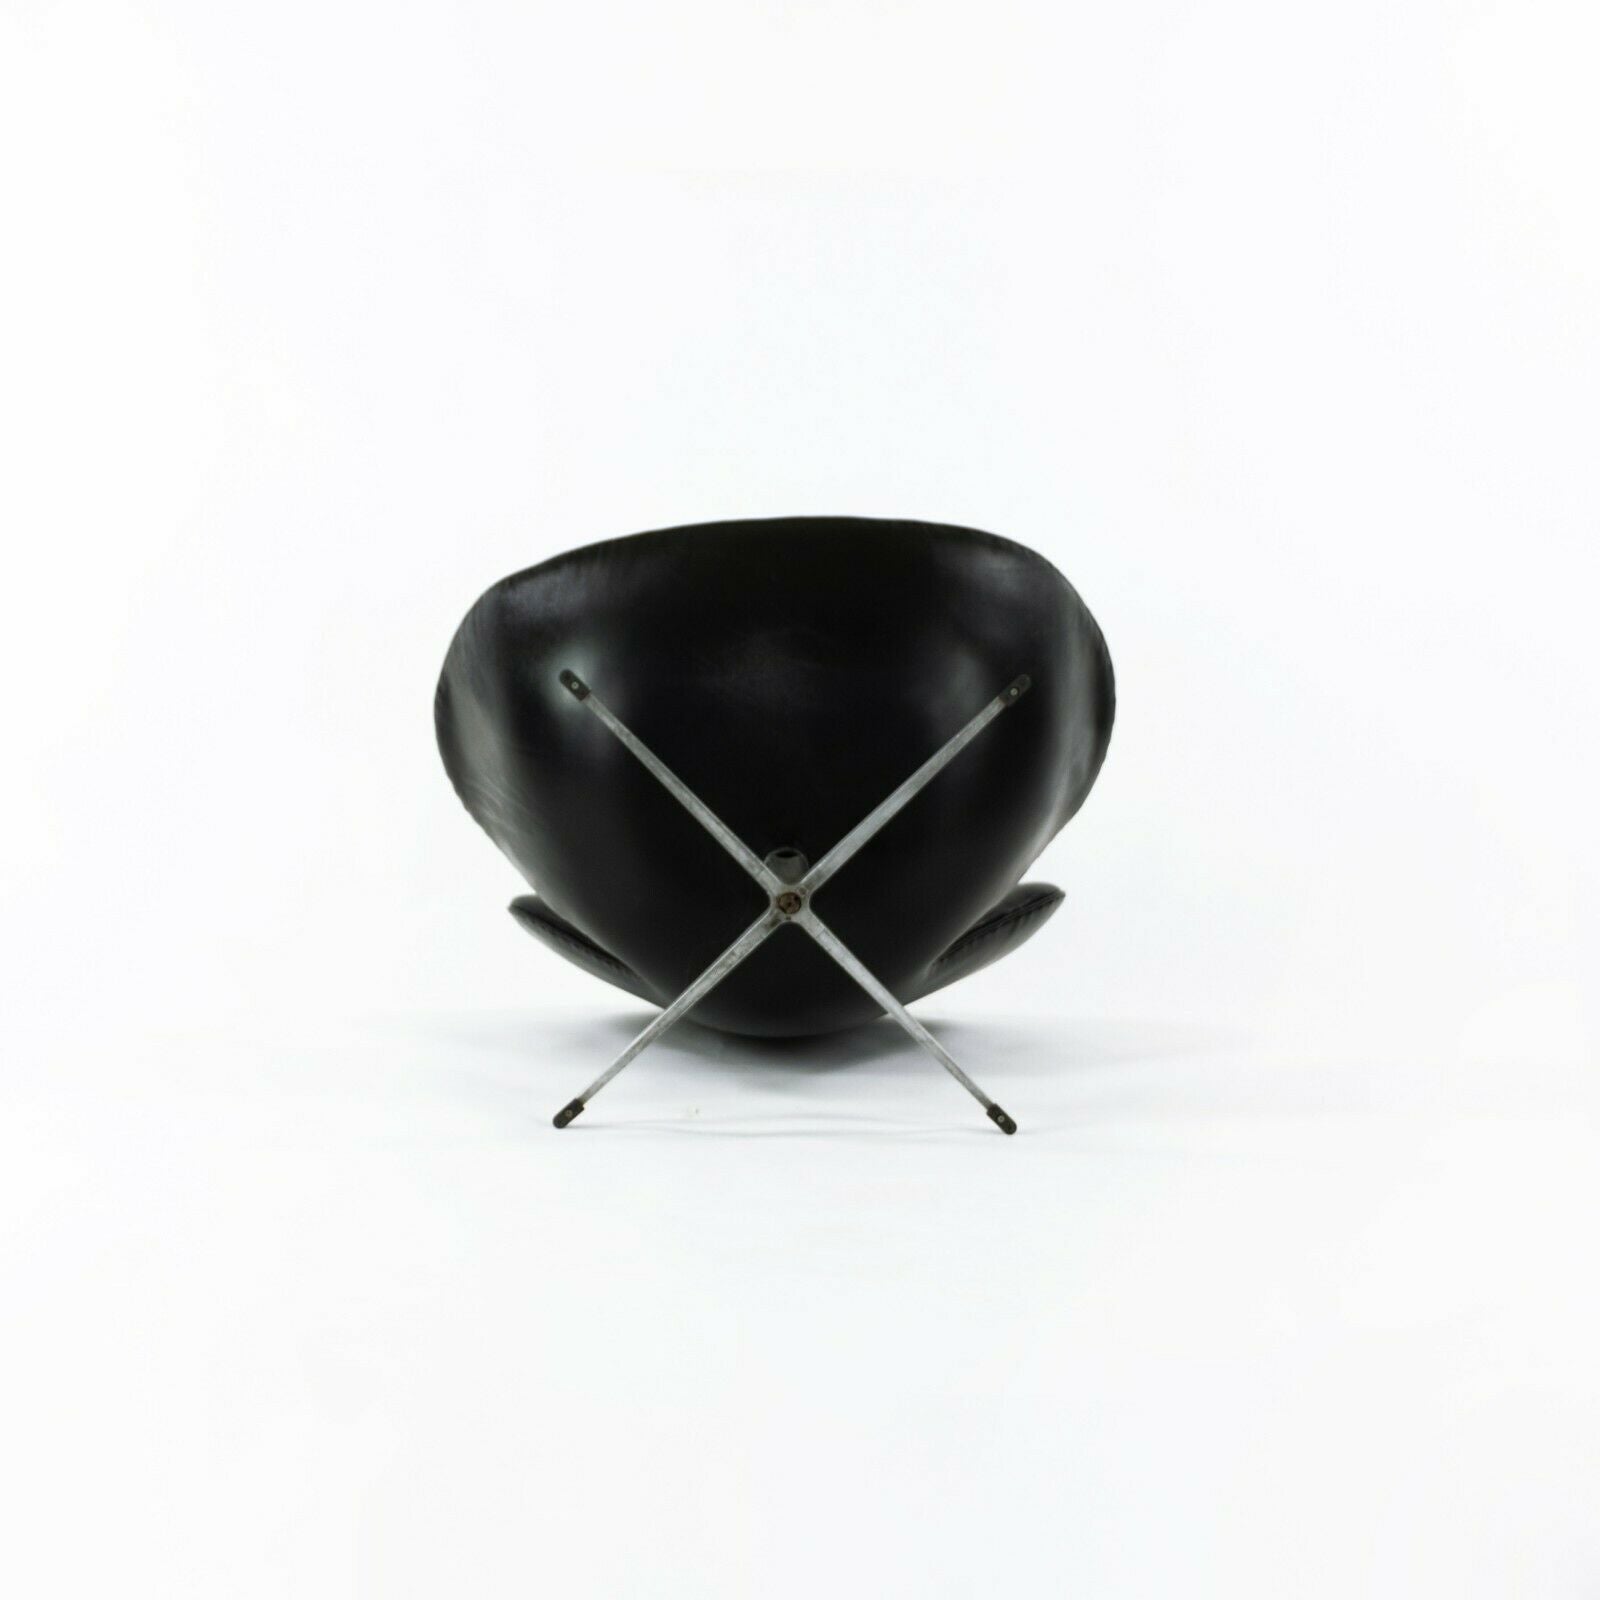 1960s Arne Jacobsen Swan Chair by Fritz Hansen of Denmark in Black Leather